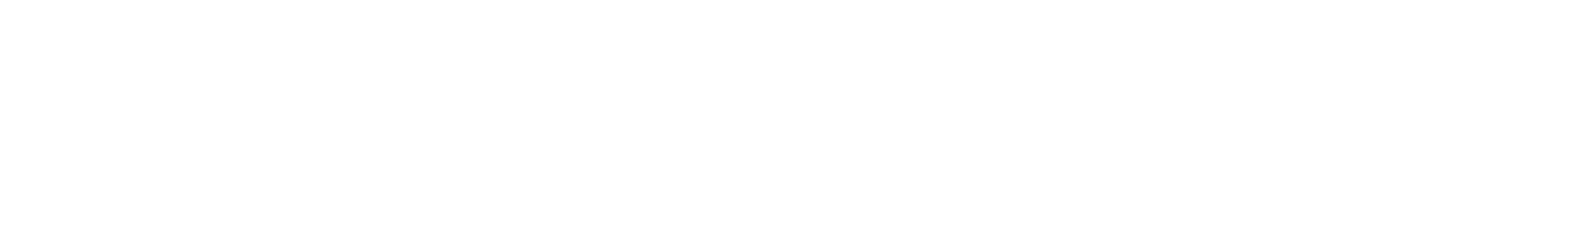 Ouster logo large for dark backgrounds (transparent PNG)